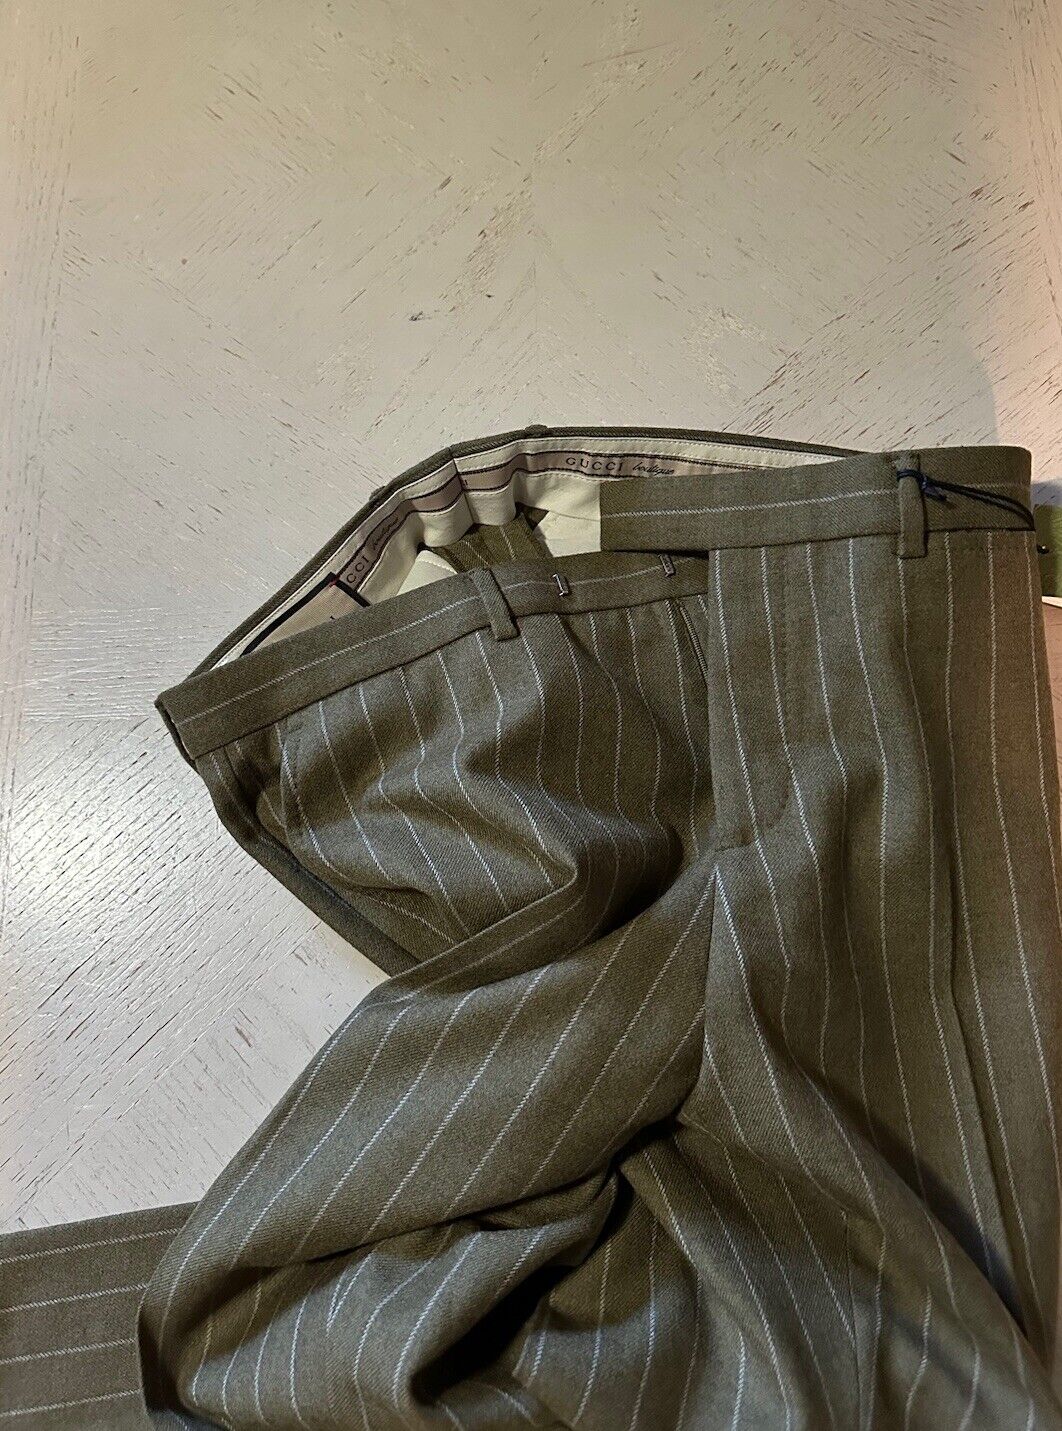 NWT $4850 Gucci Men’s Wool Striped Suit Green/Beige 44R US/54R Eu